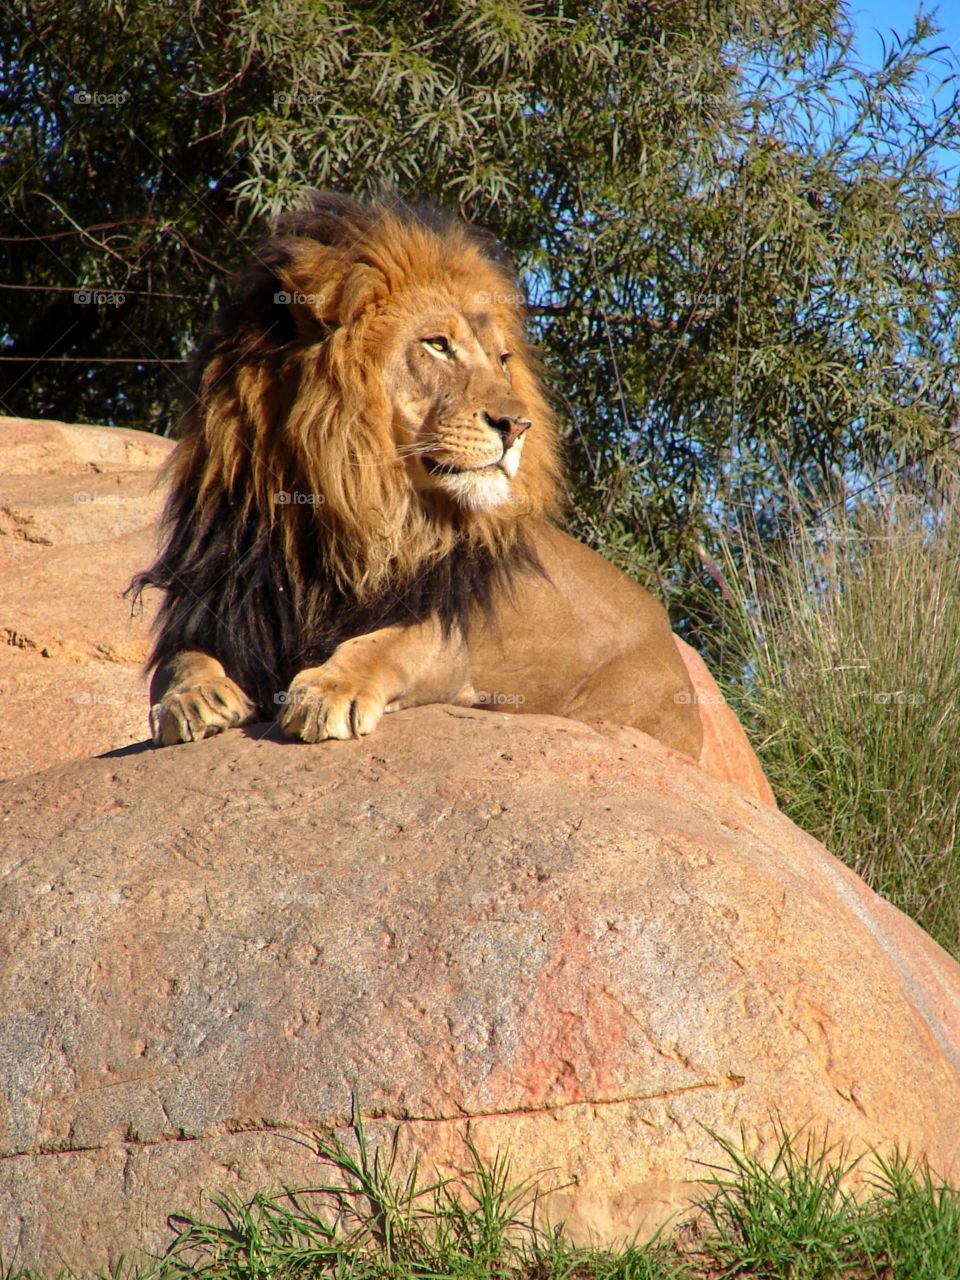 Lion. This shot was taken in Vallejo California.